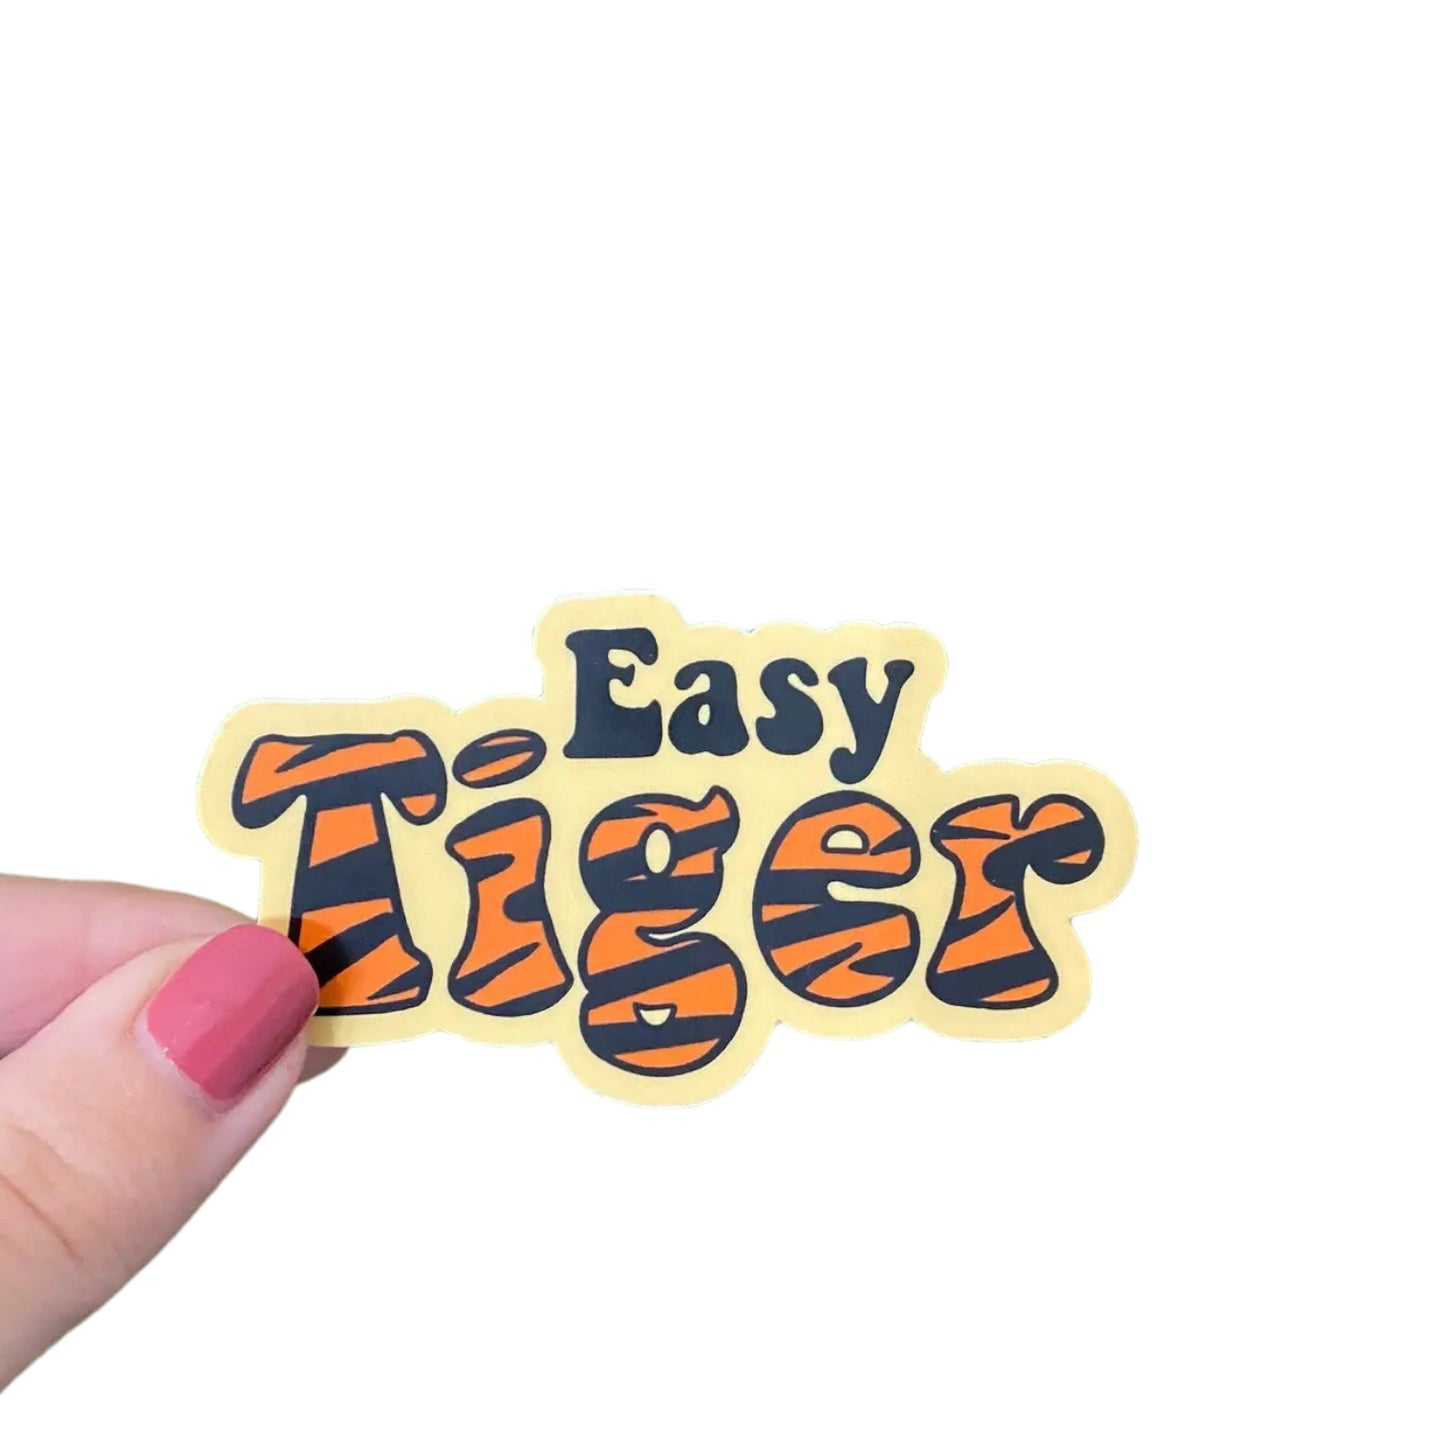 Easy Tiger Vinyl Sticker by Alex Daley Designs 